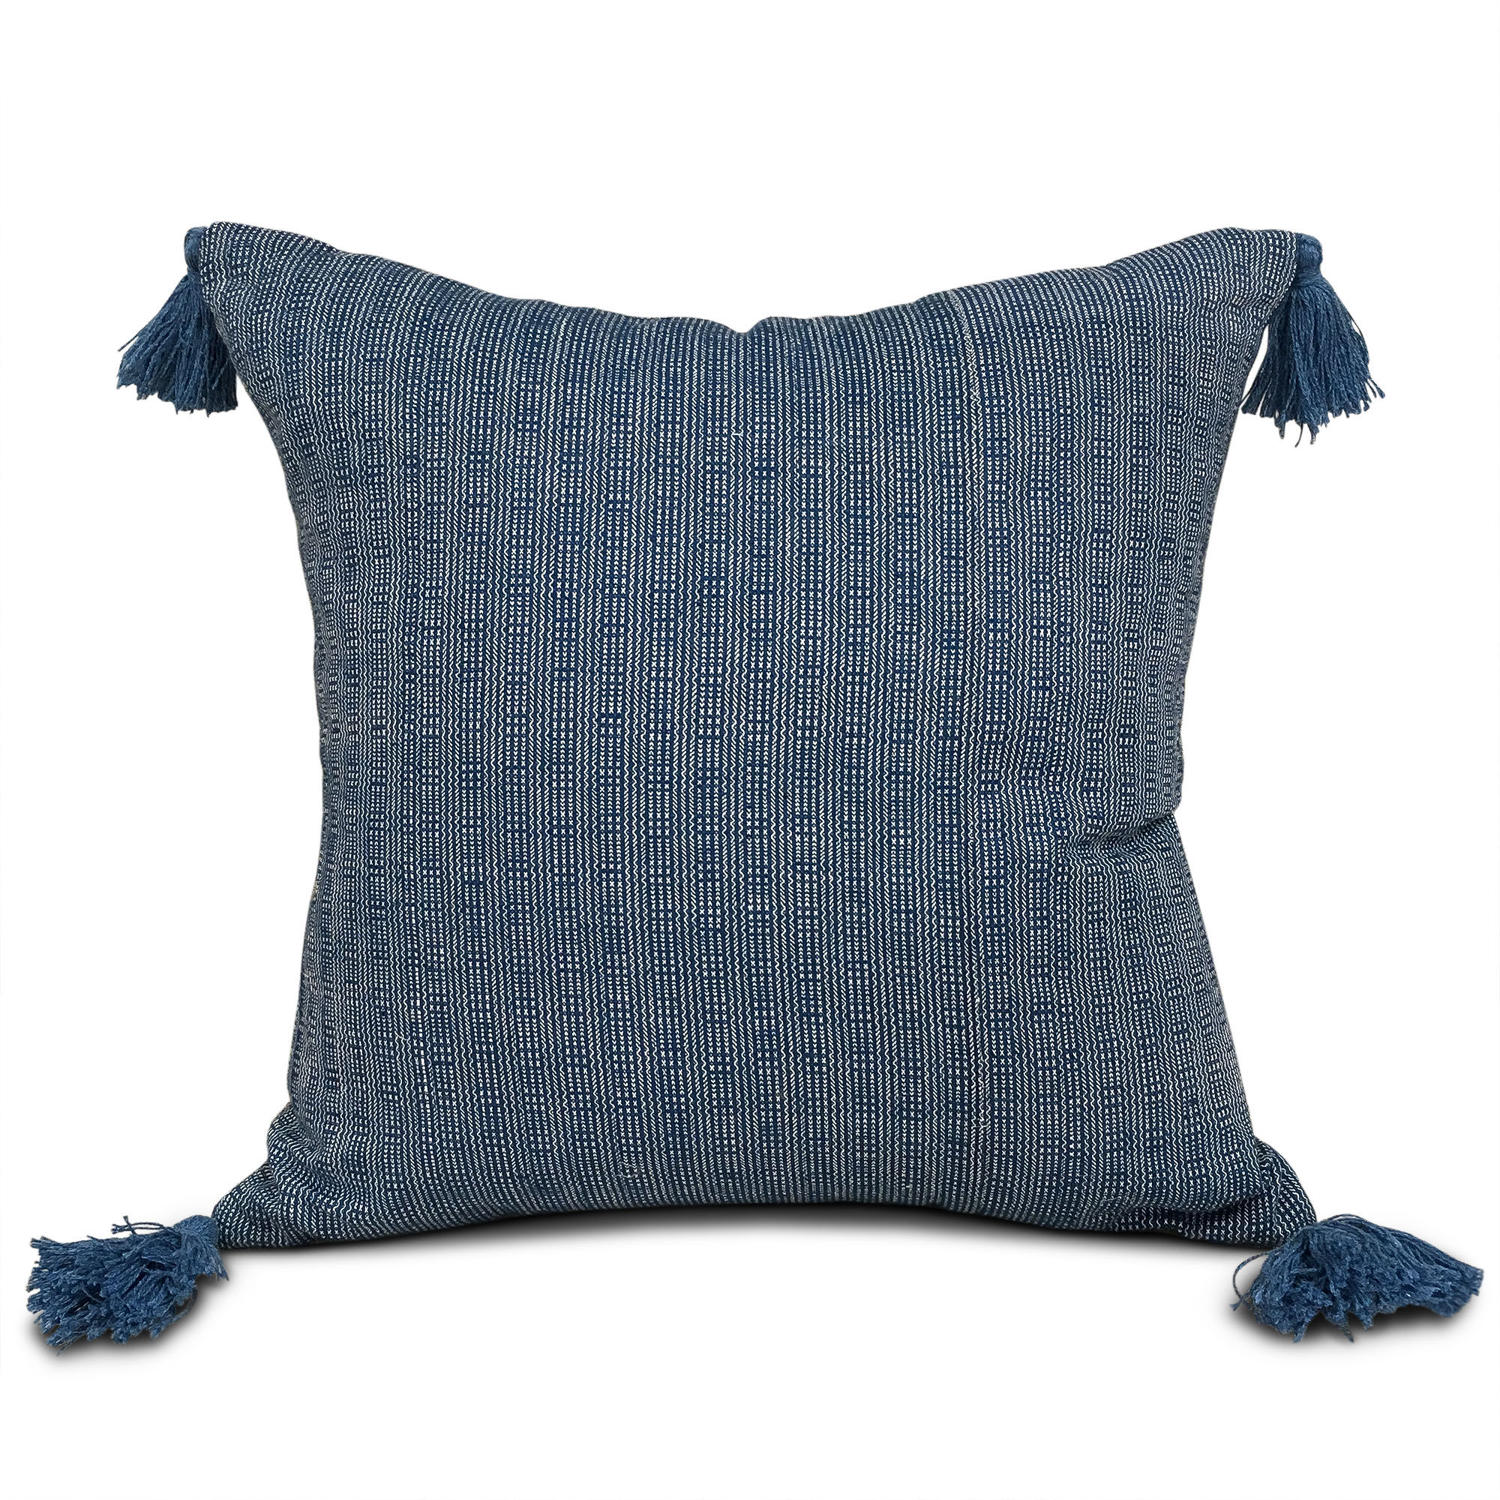 Buyi Cushions with Tassels